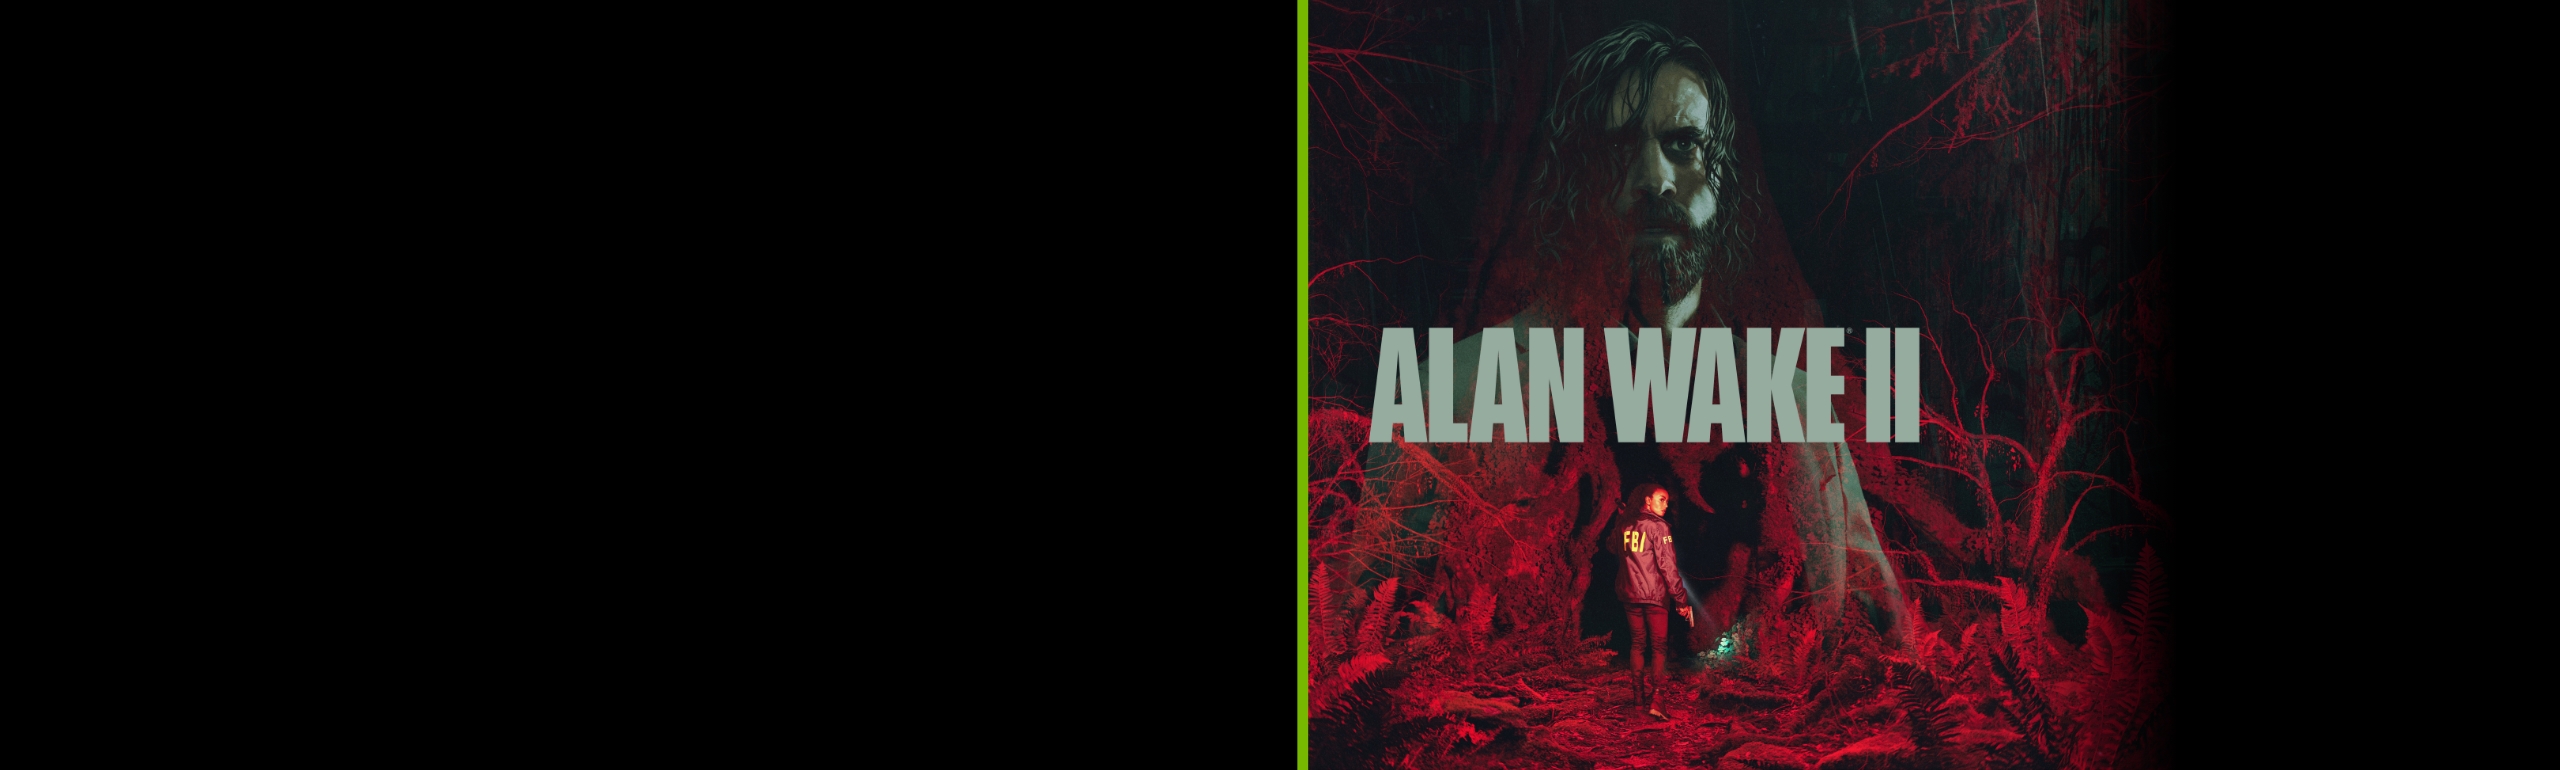 Alan Wake - PC (UK Import)